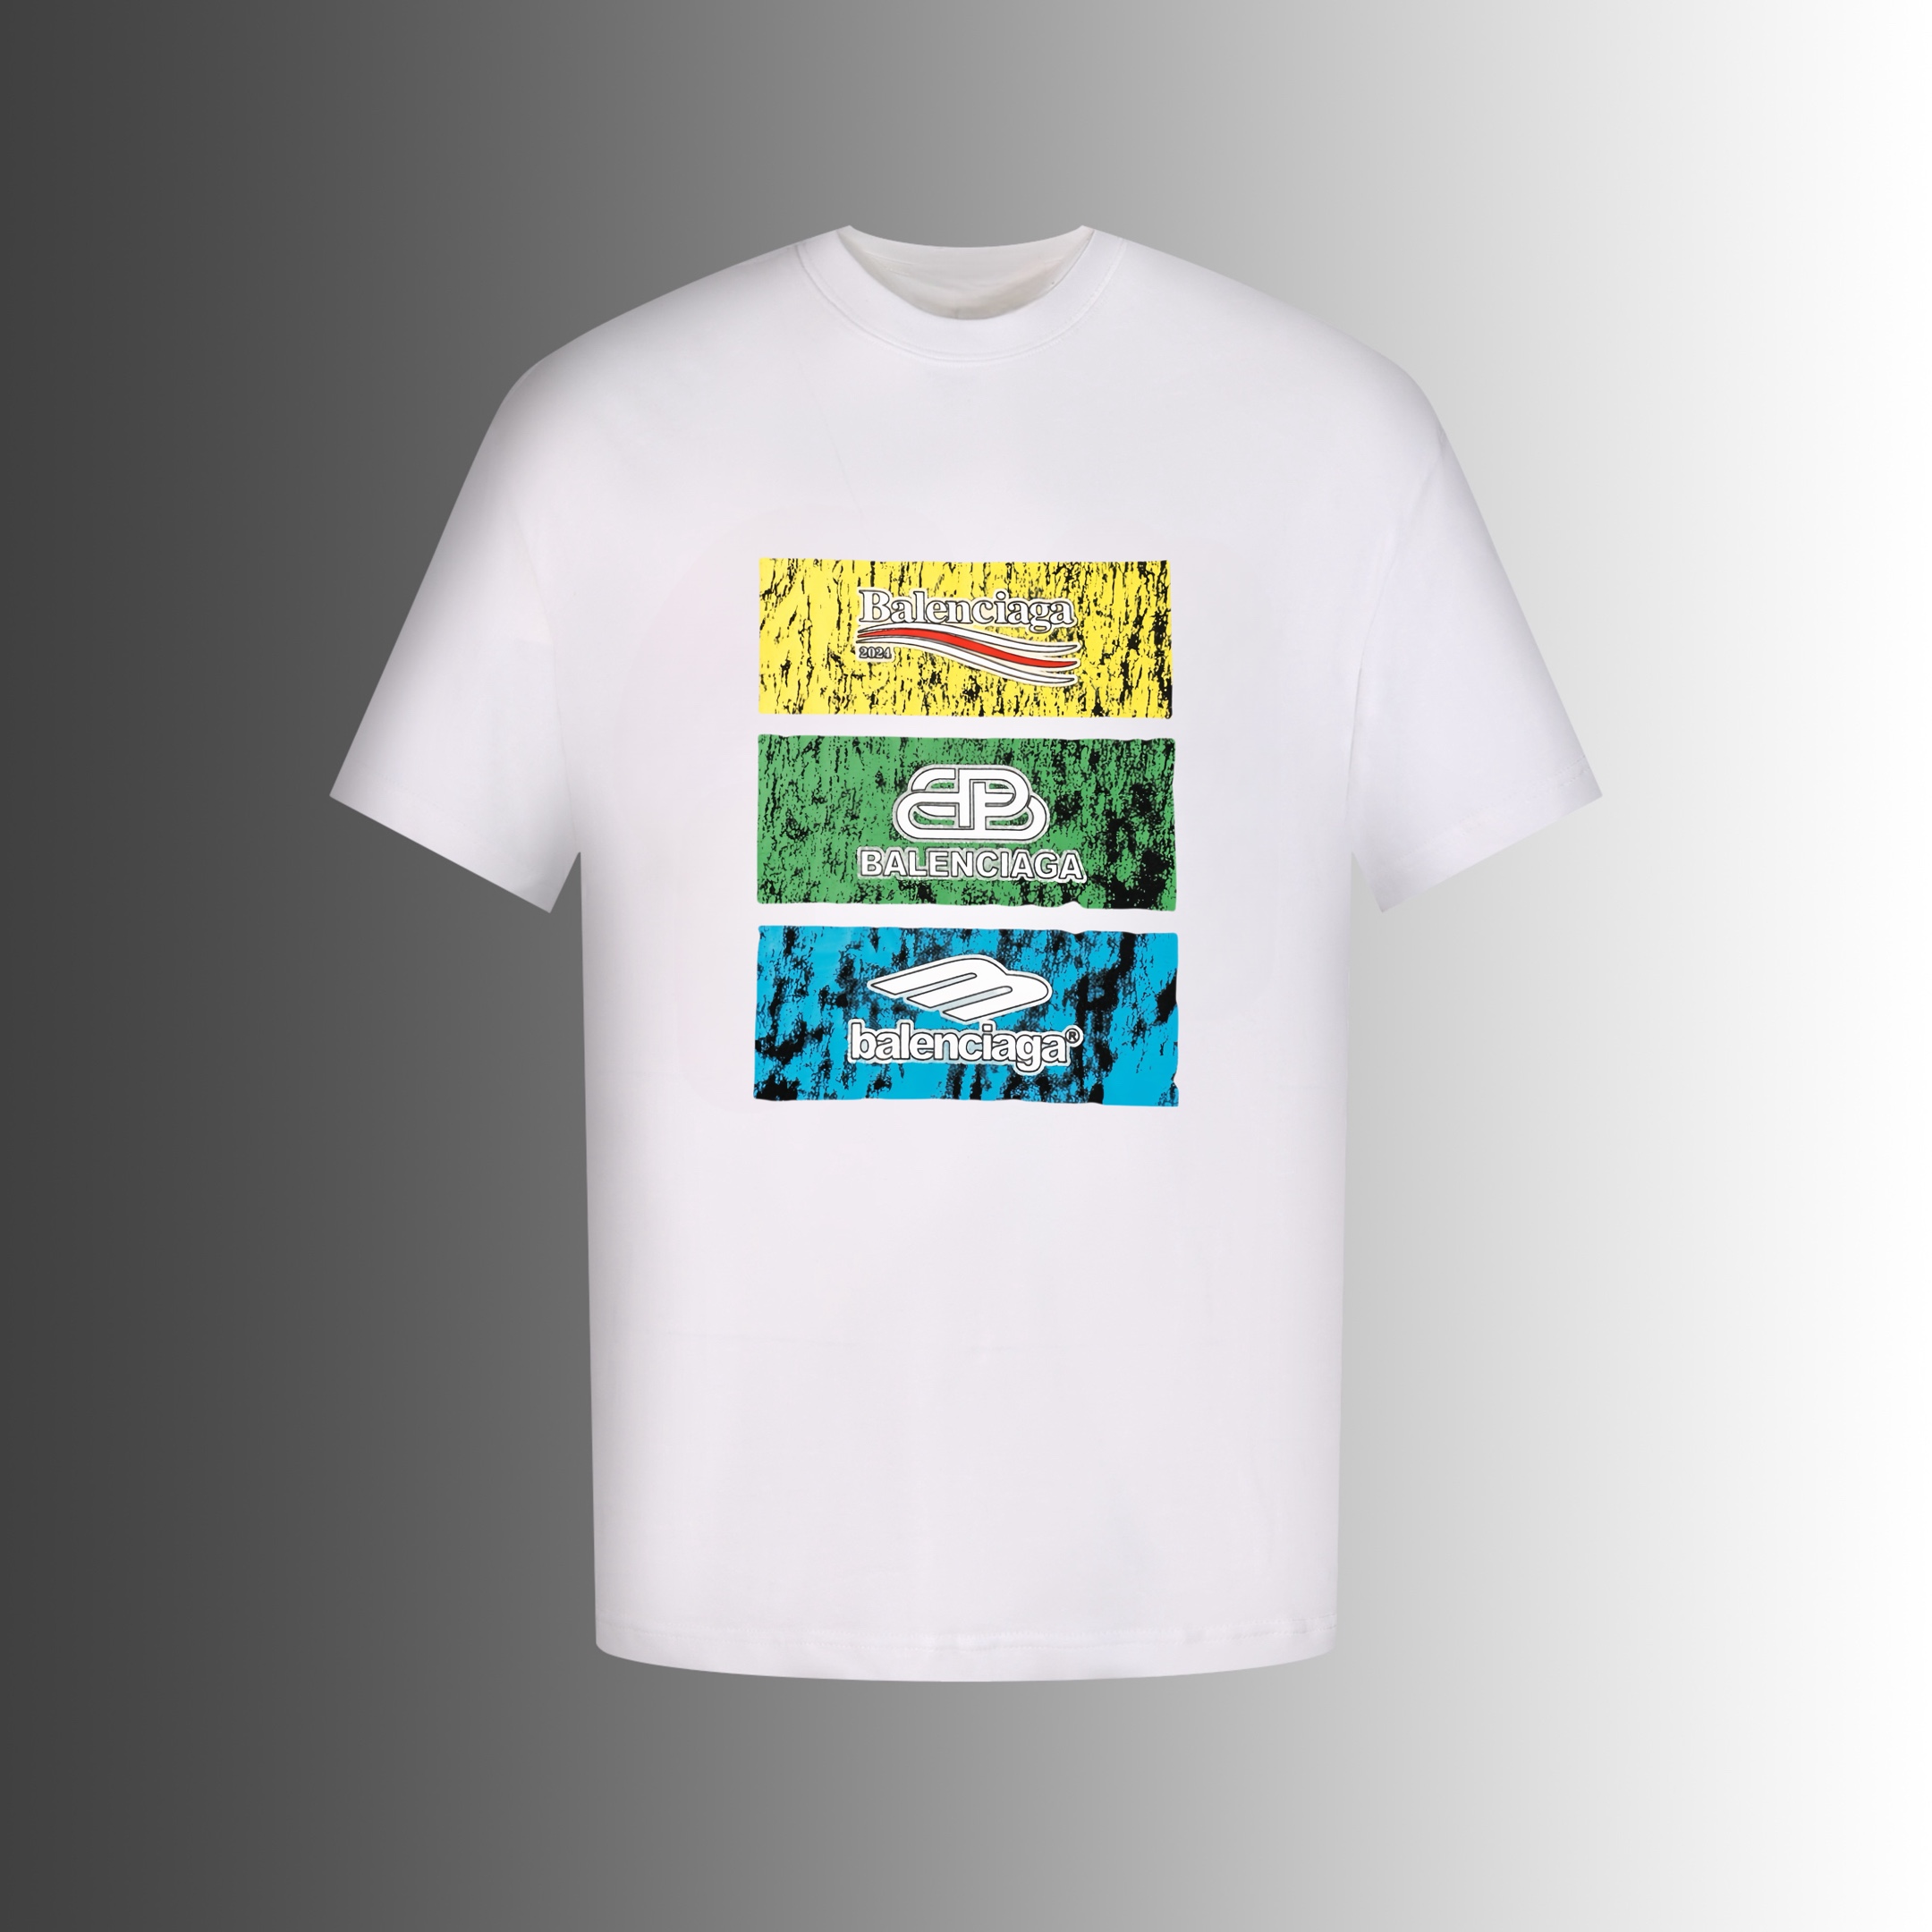 Balenciaga Clothing T-Shirt Printing Unisex Cotton Spring/Summer Collection